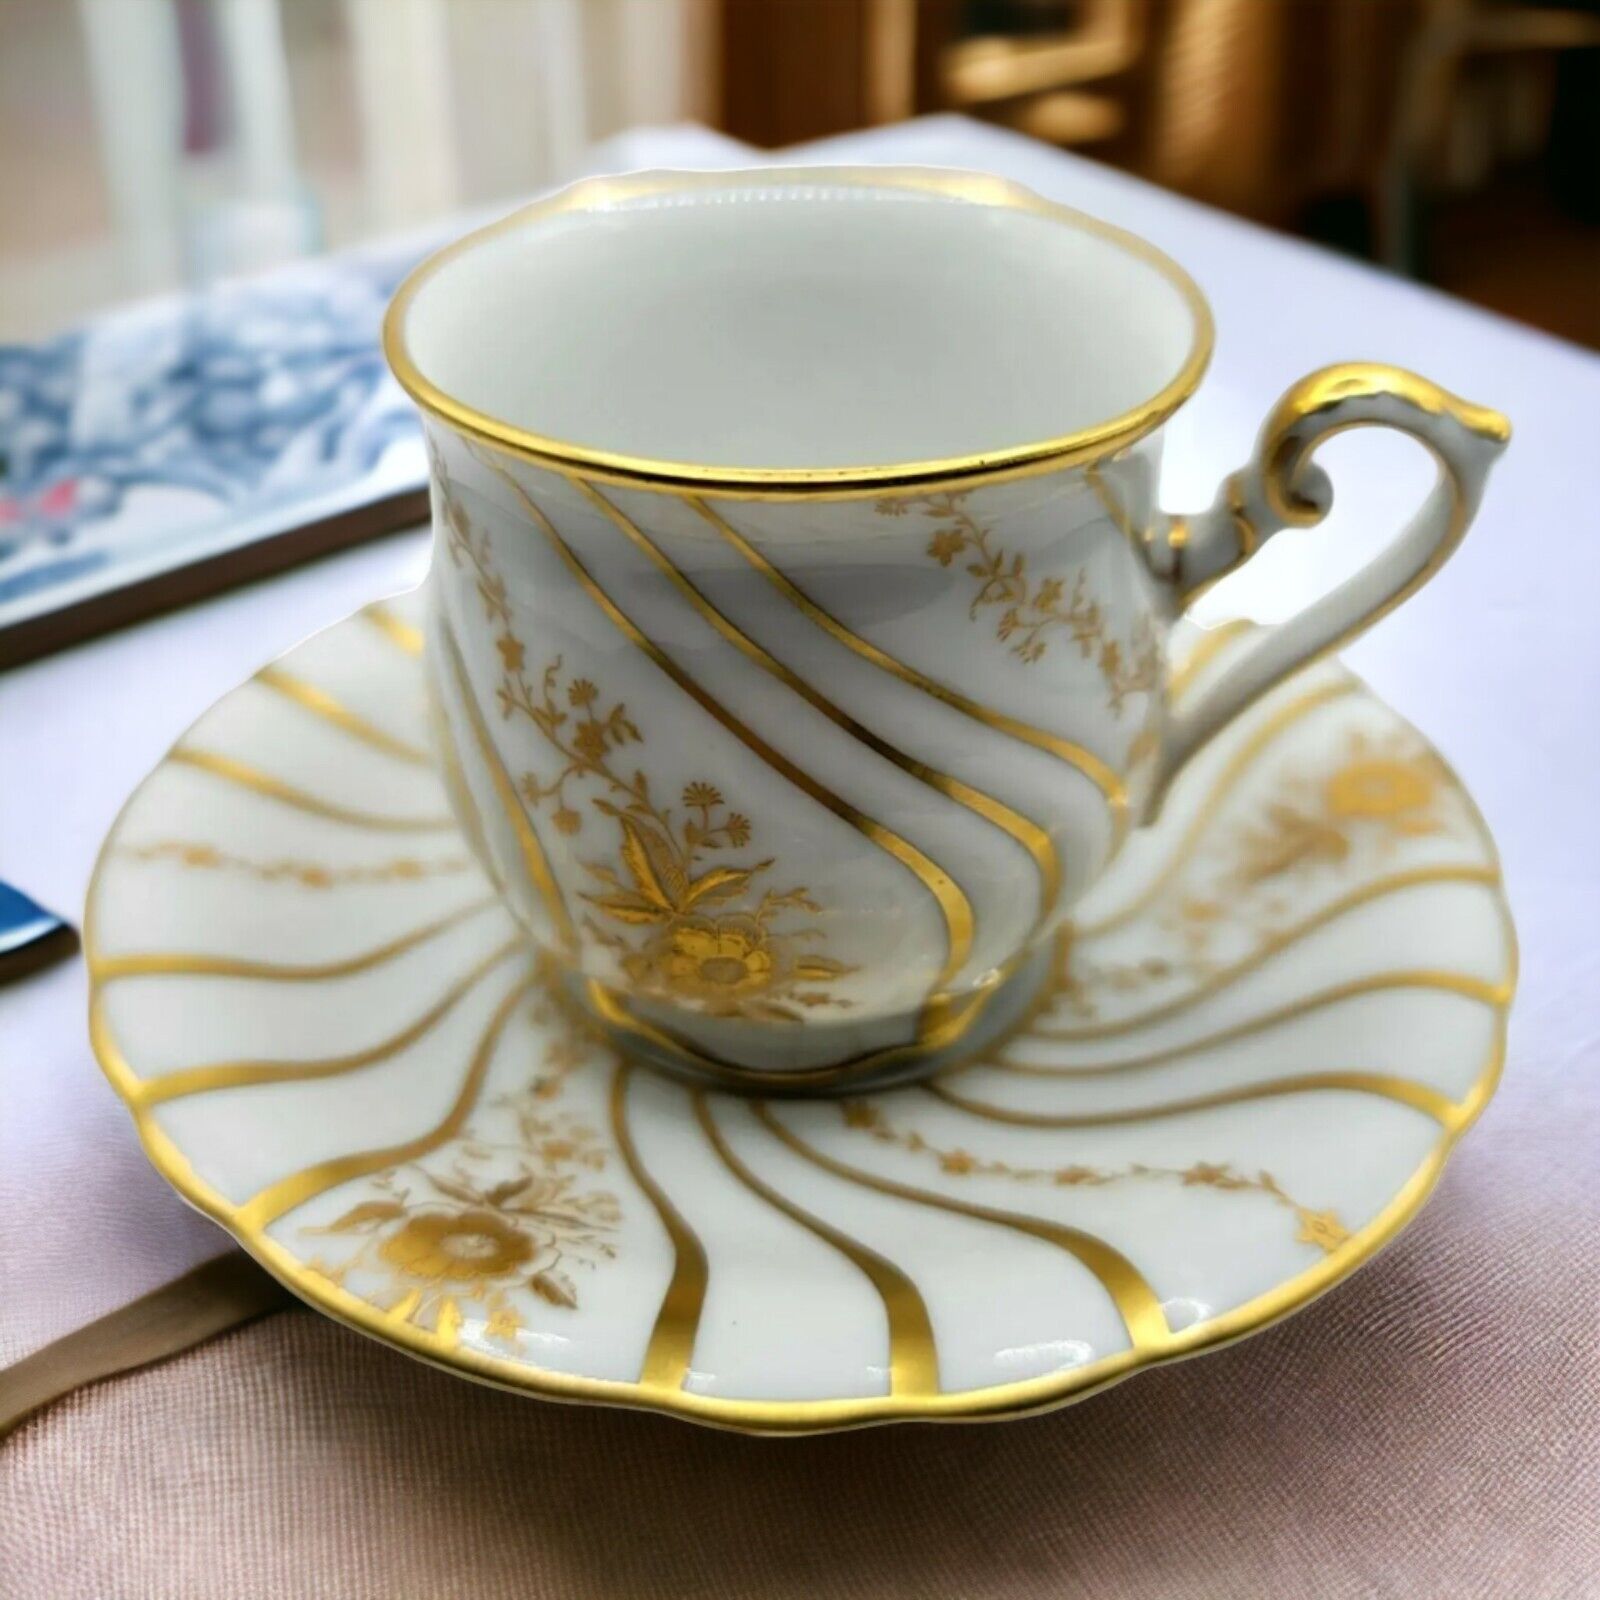 HUTSCHENREUTHER Germany Porcelain Demitasse Teacup Saucer White Gold 1930's 